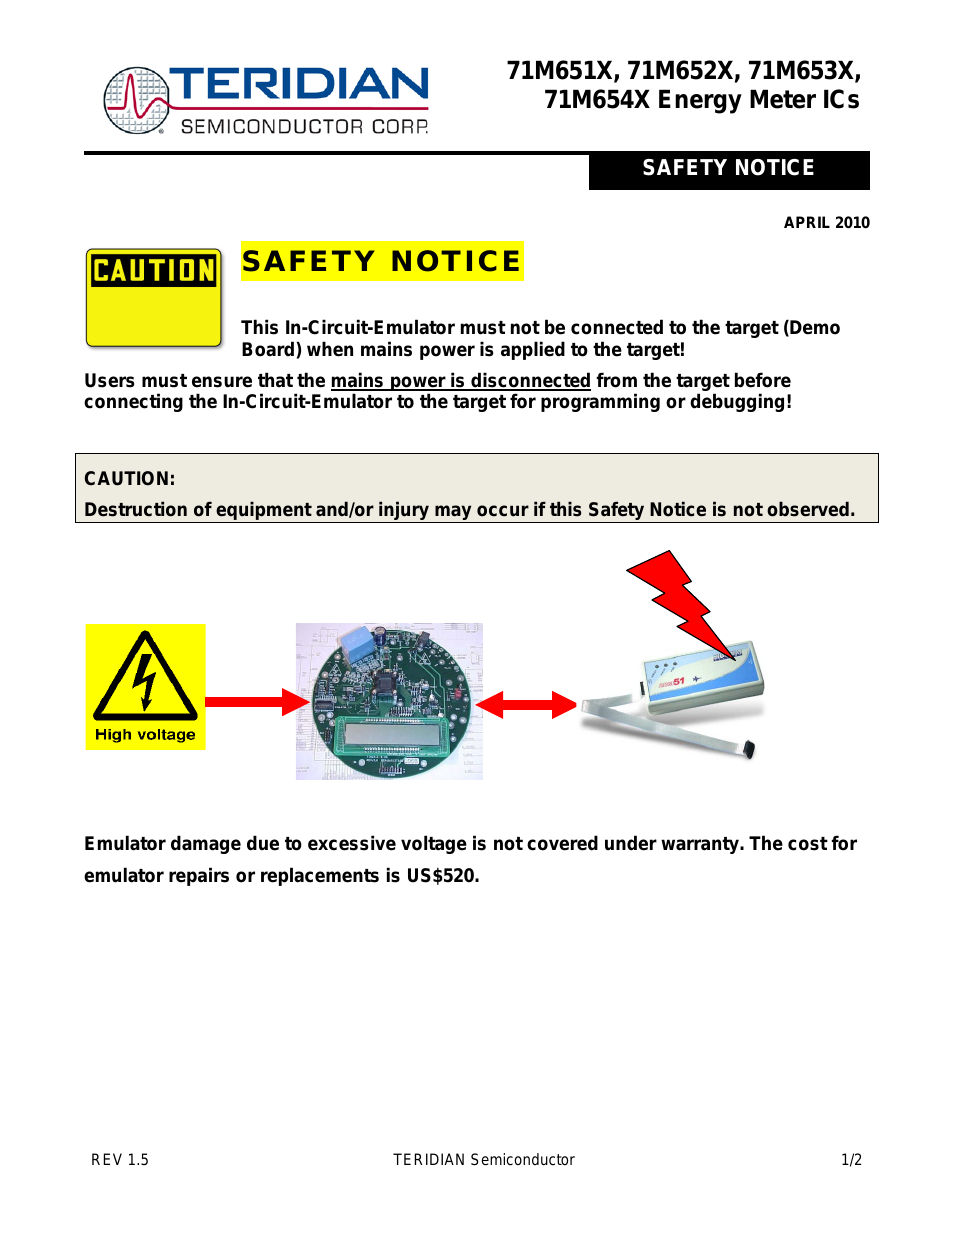 71M65xx ADM51 ICE Safety Notice